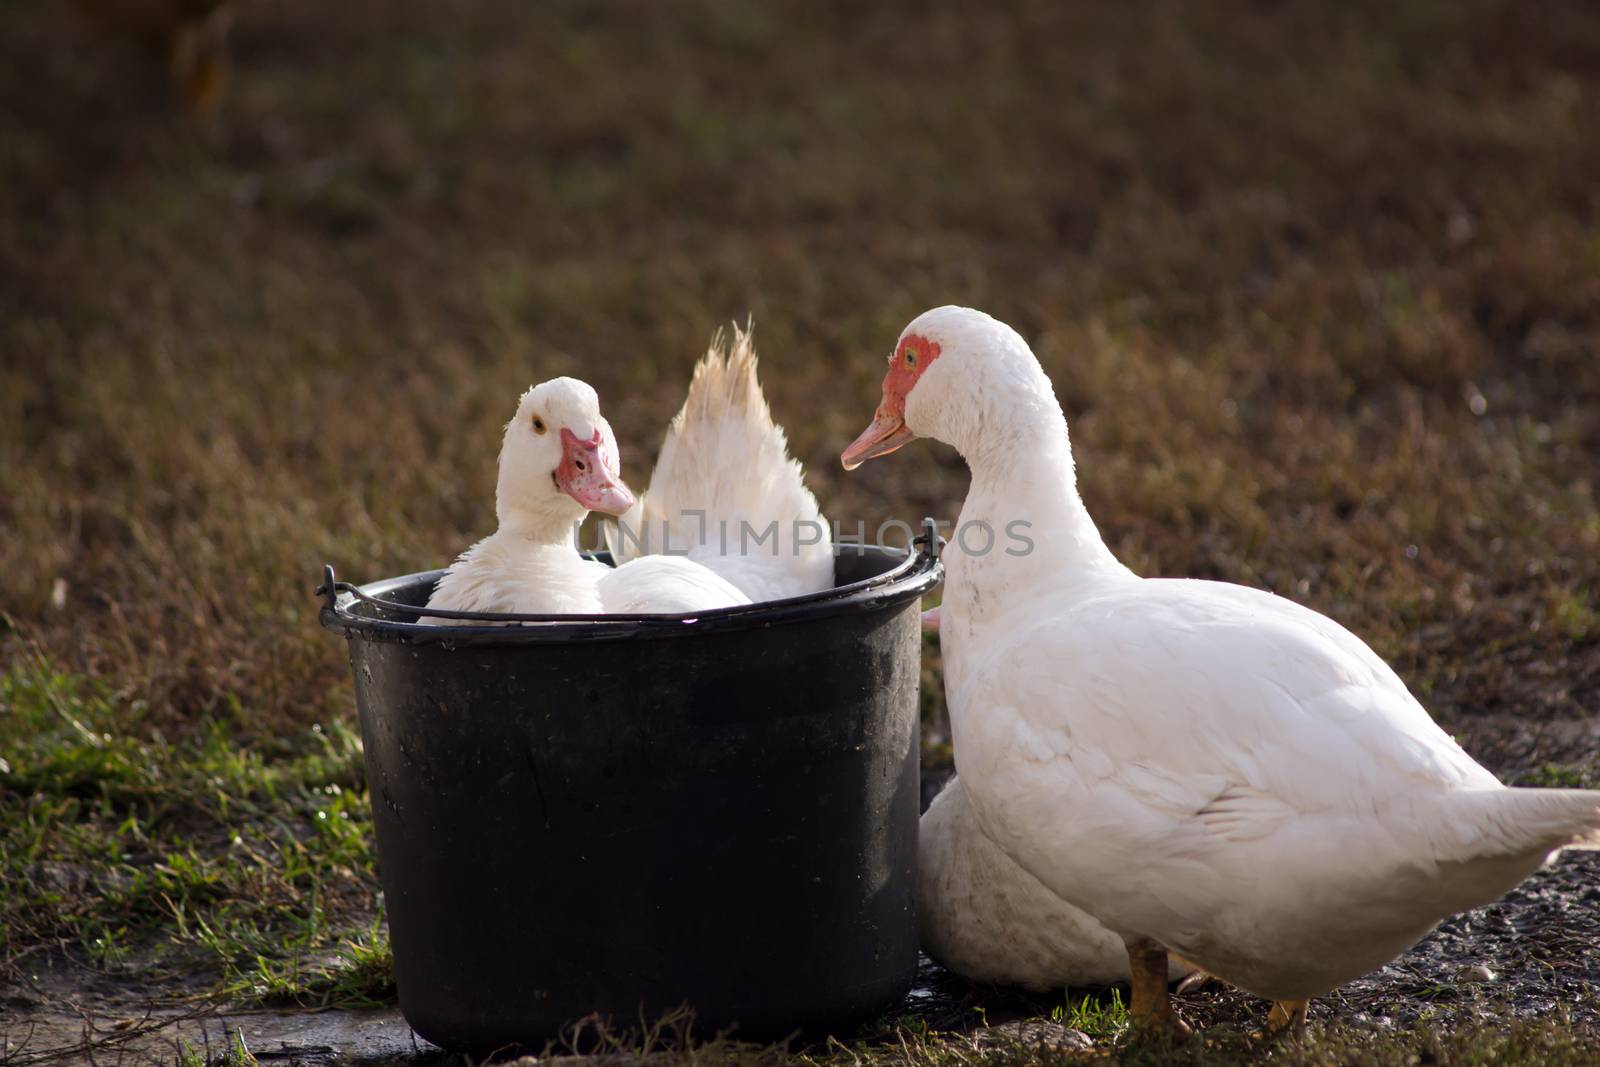 Bathe the duck (Cairina moschata) in the bucket.
